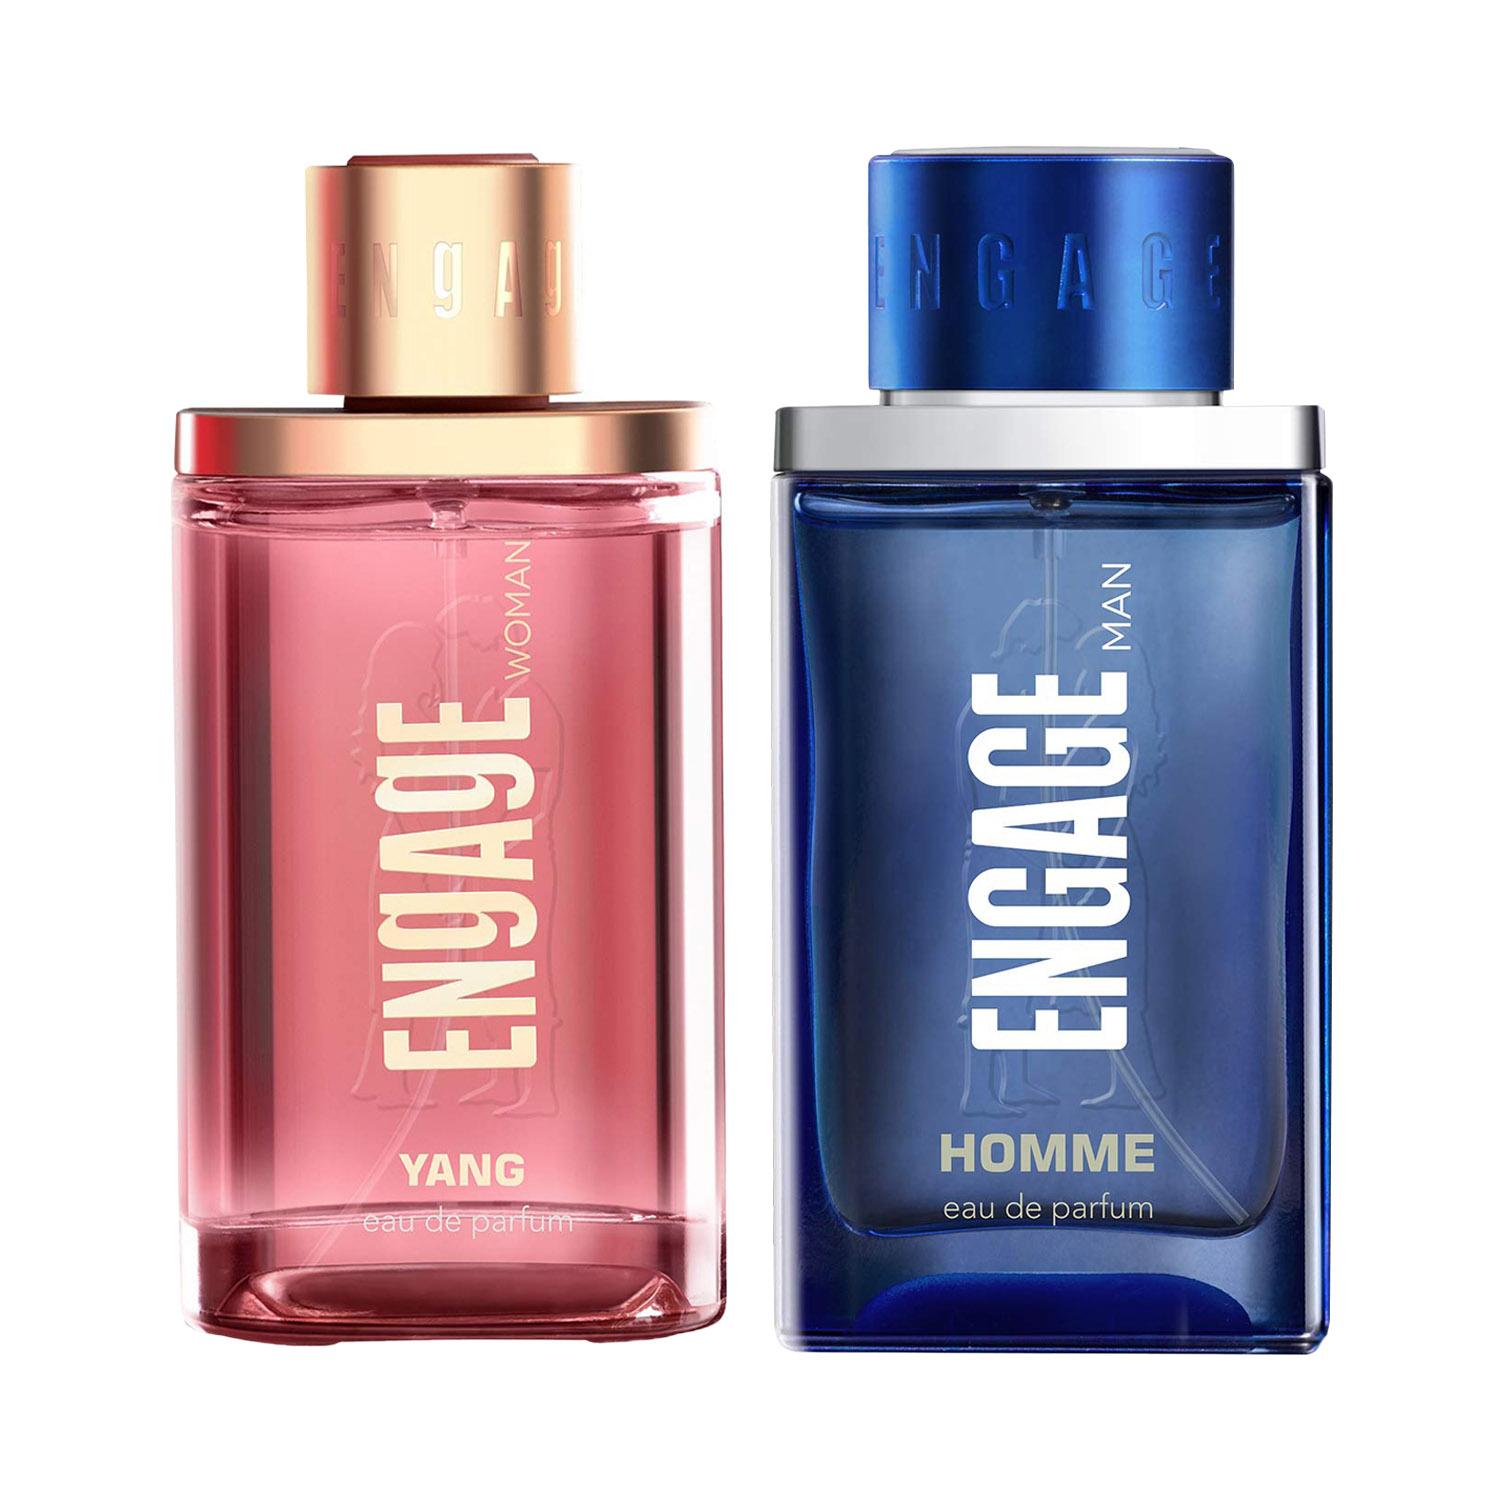 Engage | Engage Premium Perfume Combo Man & Woman (Homme & Yang)